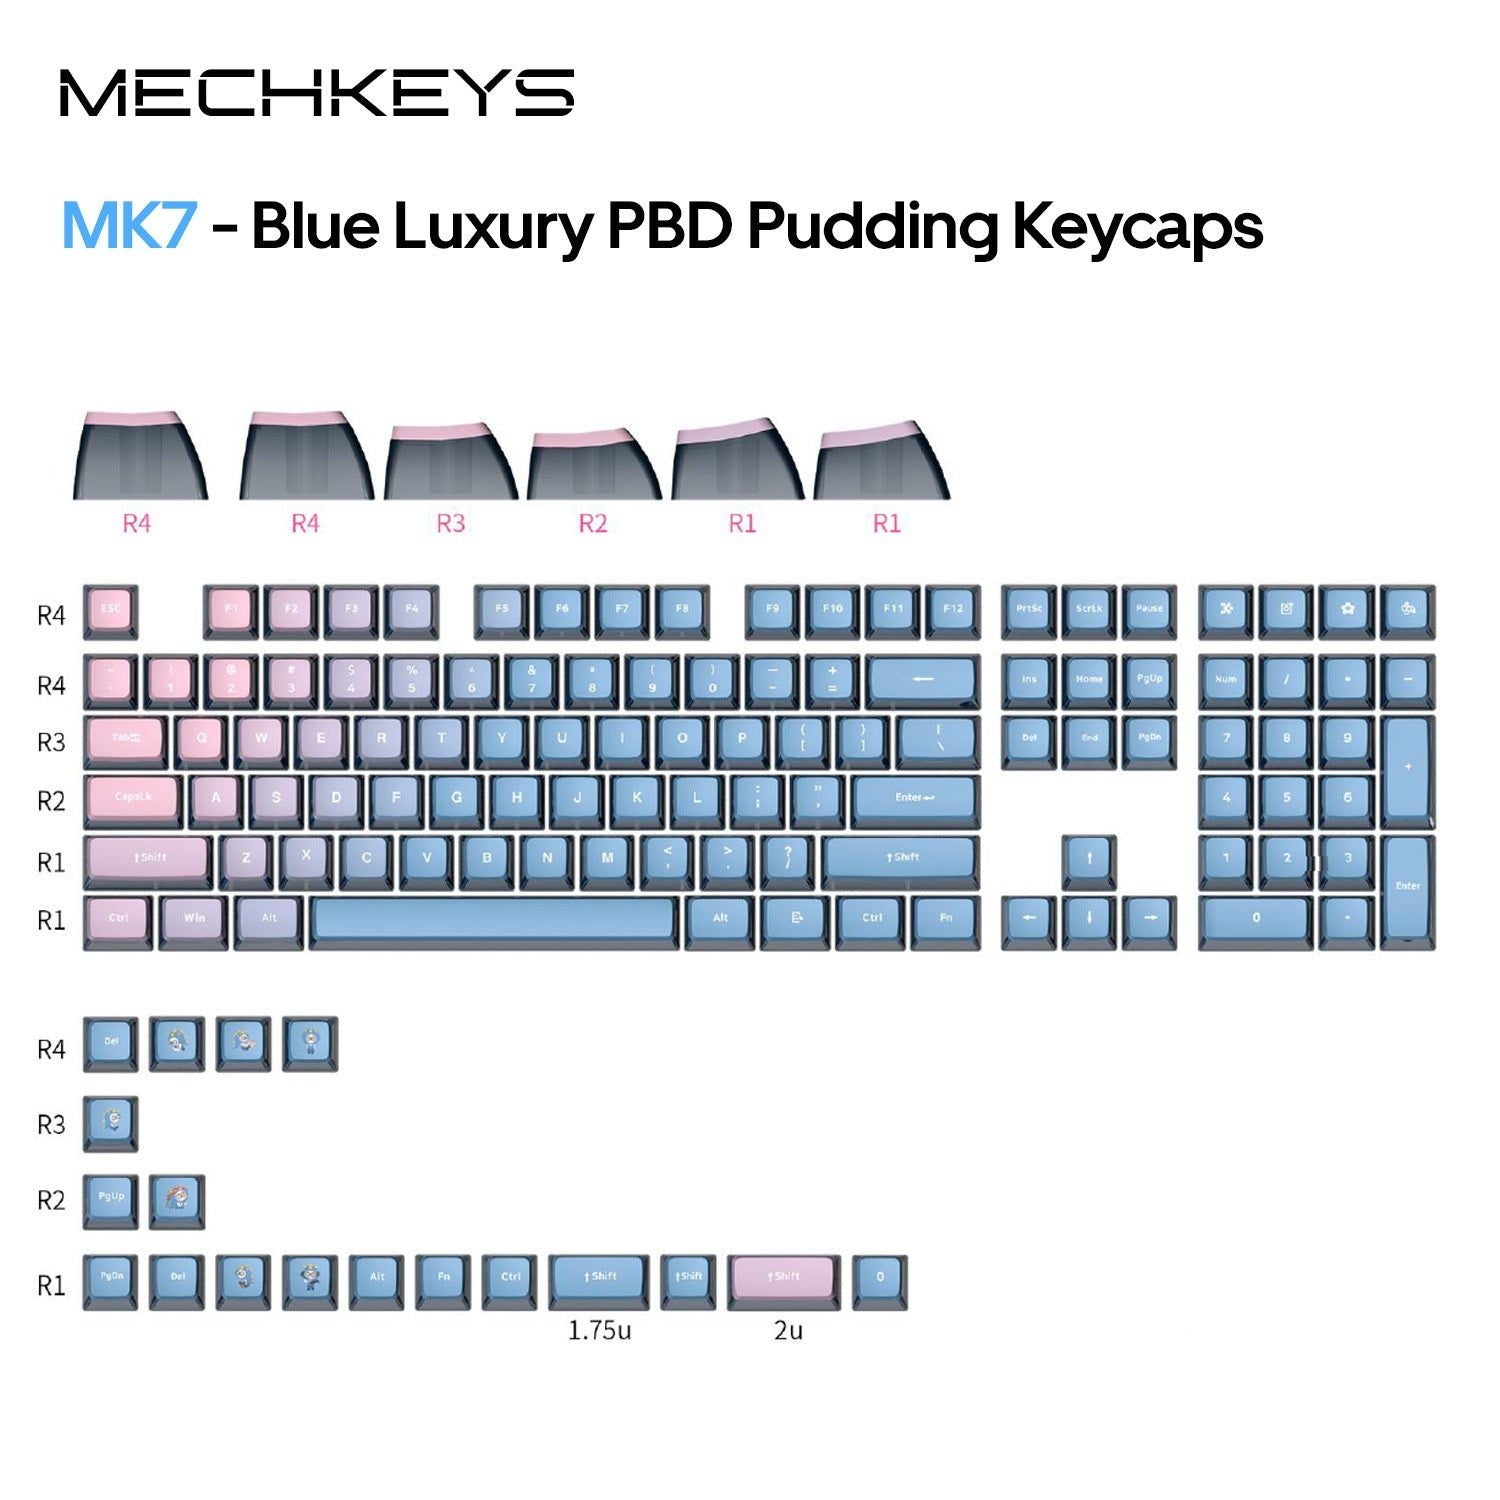 OVERCLOCK MECHKEYS Blue Luxury PBT Pudding Keycaps - OVERCLOCK Computer